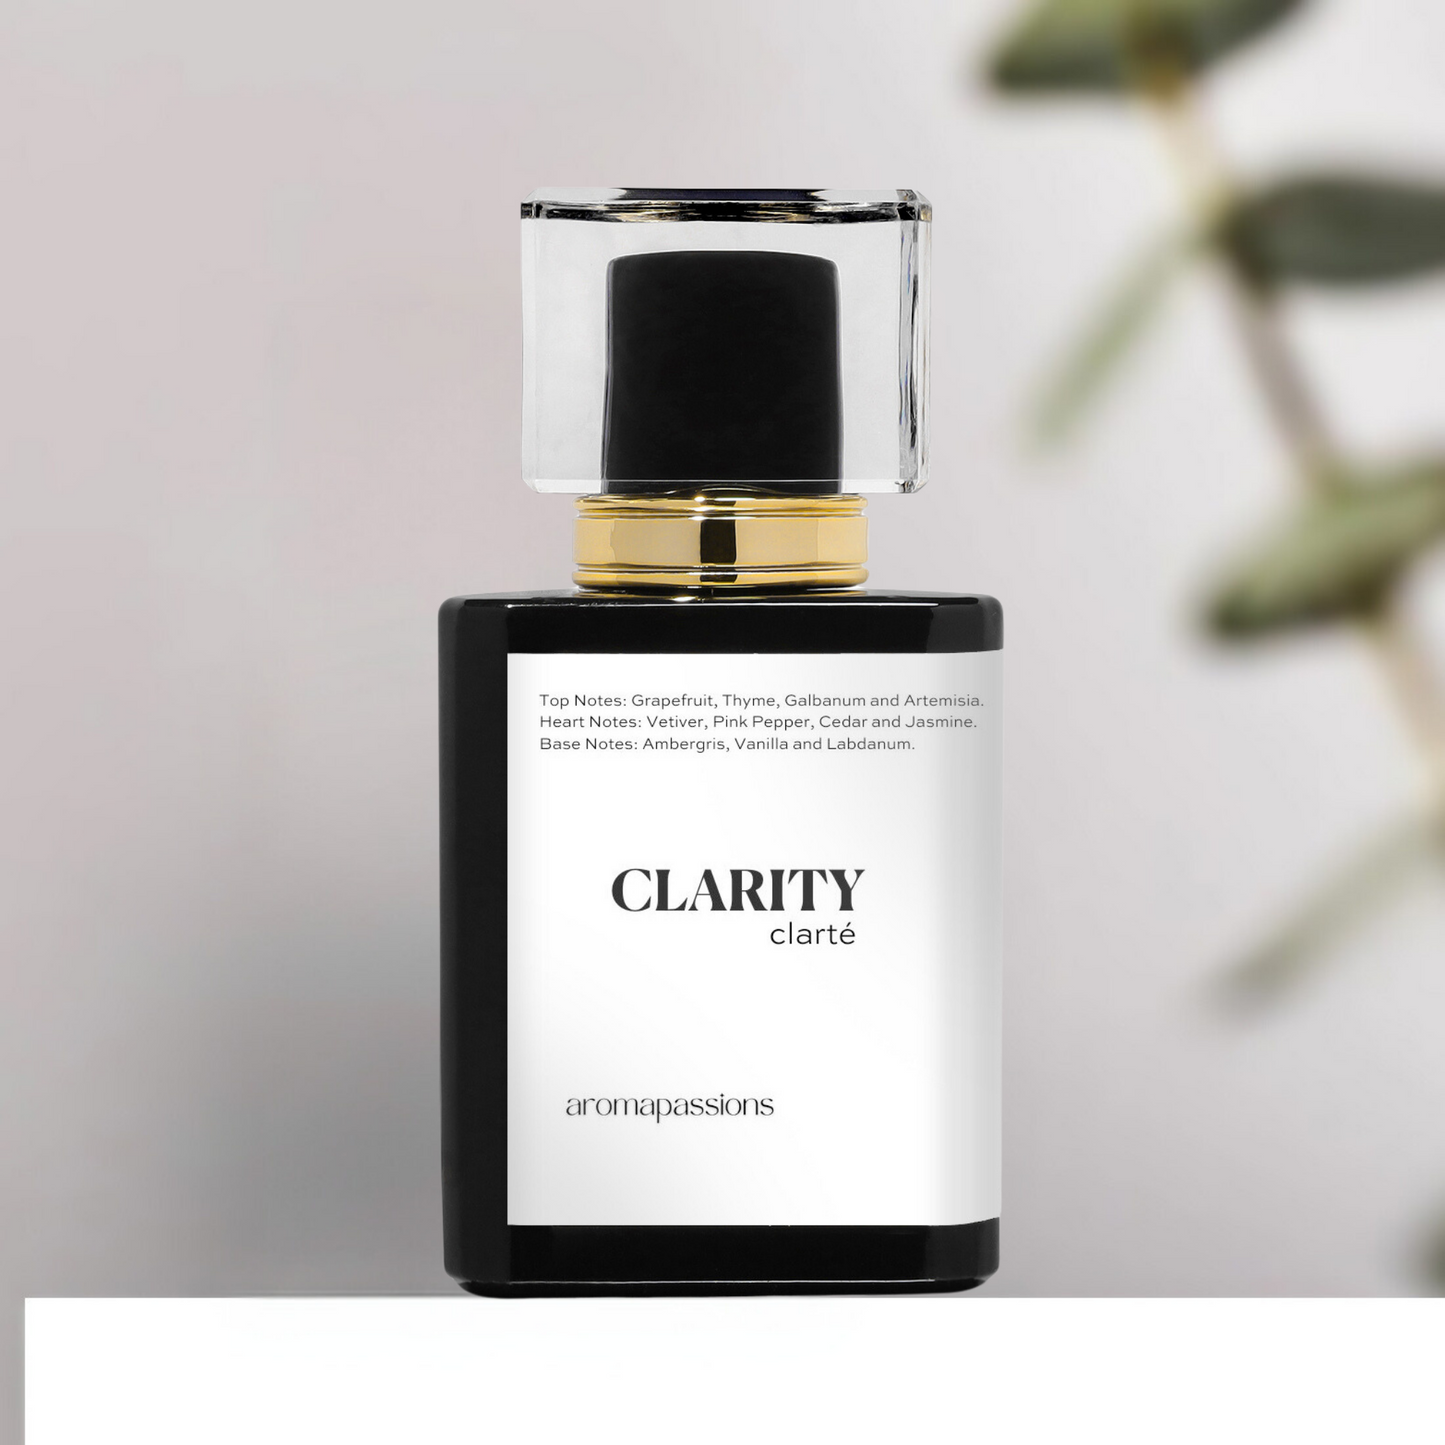 CLARITY | Inspired by ROJA ELYSIUM PARFUM COLOGNE | Elysium Dupe Pheromone Perfume